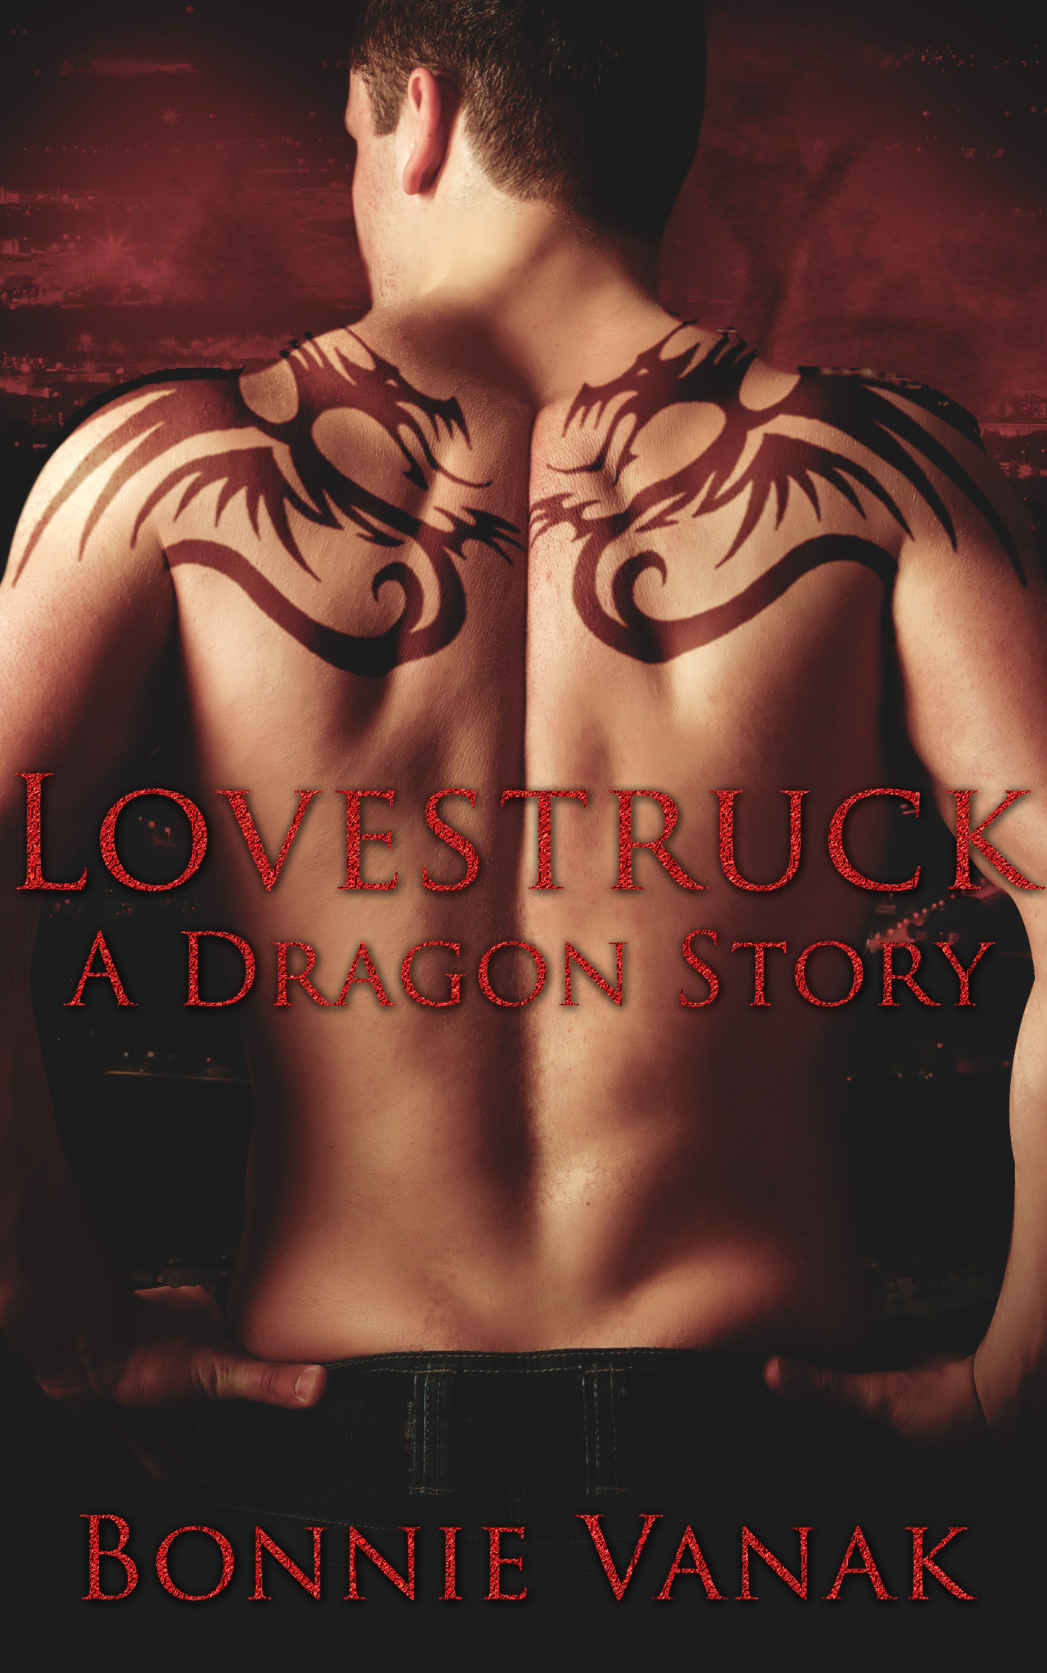 Lovestruck, a Dragon Story by Bonnie Vanak